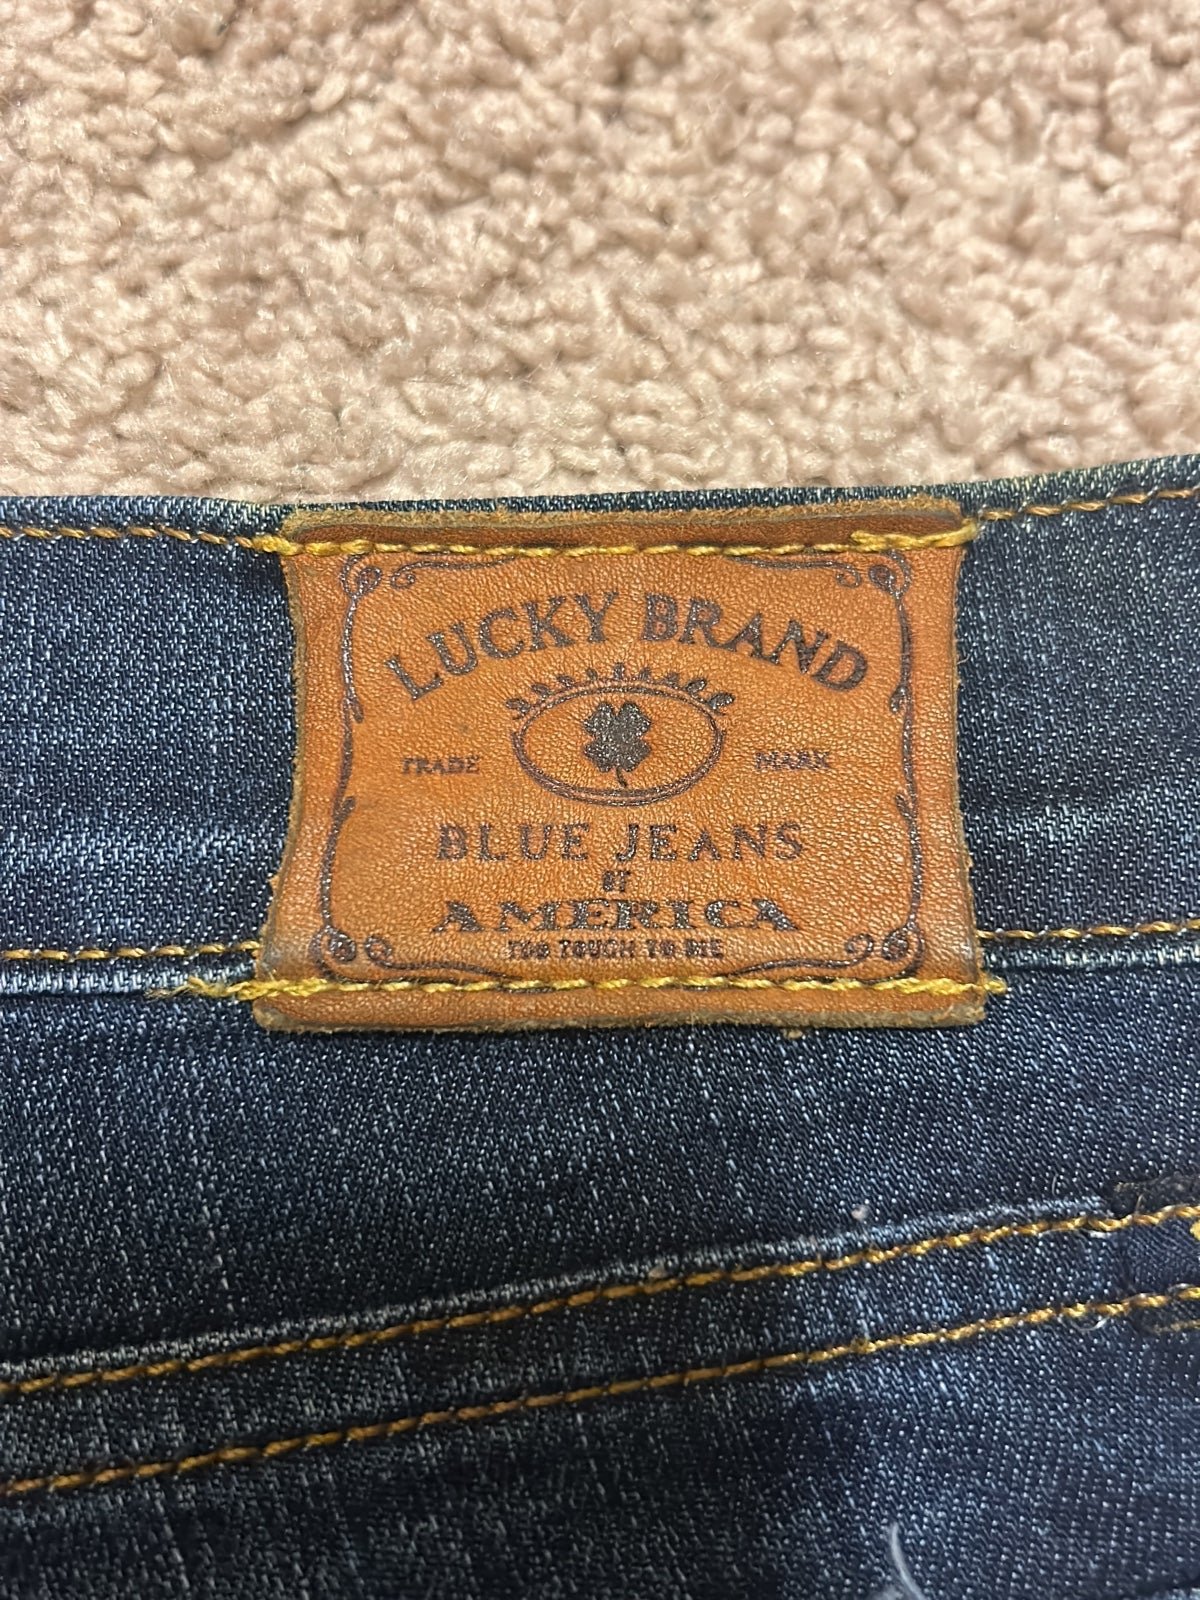 big discount Lucky Brand dark wash flare jeans pdOt35unU hot sale